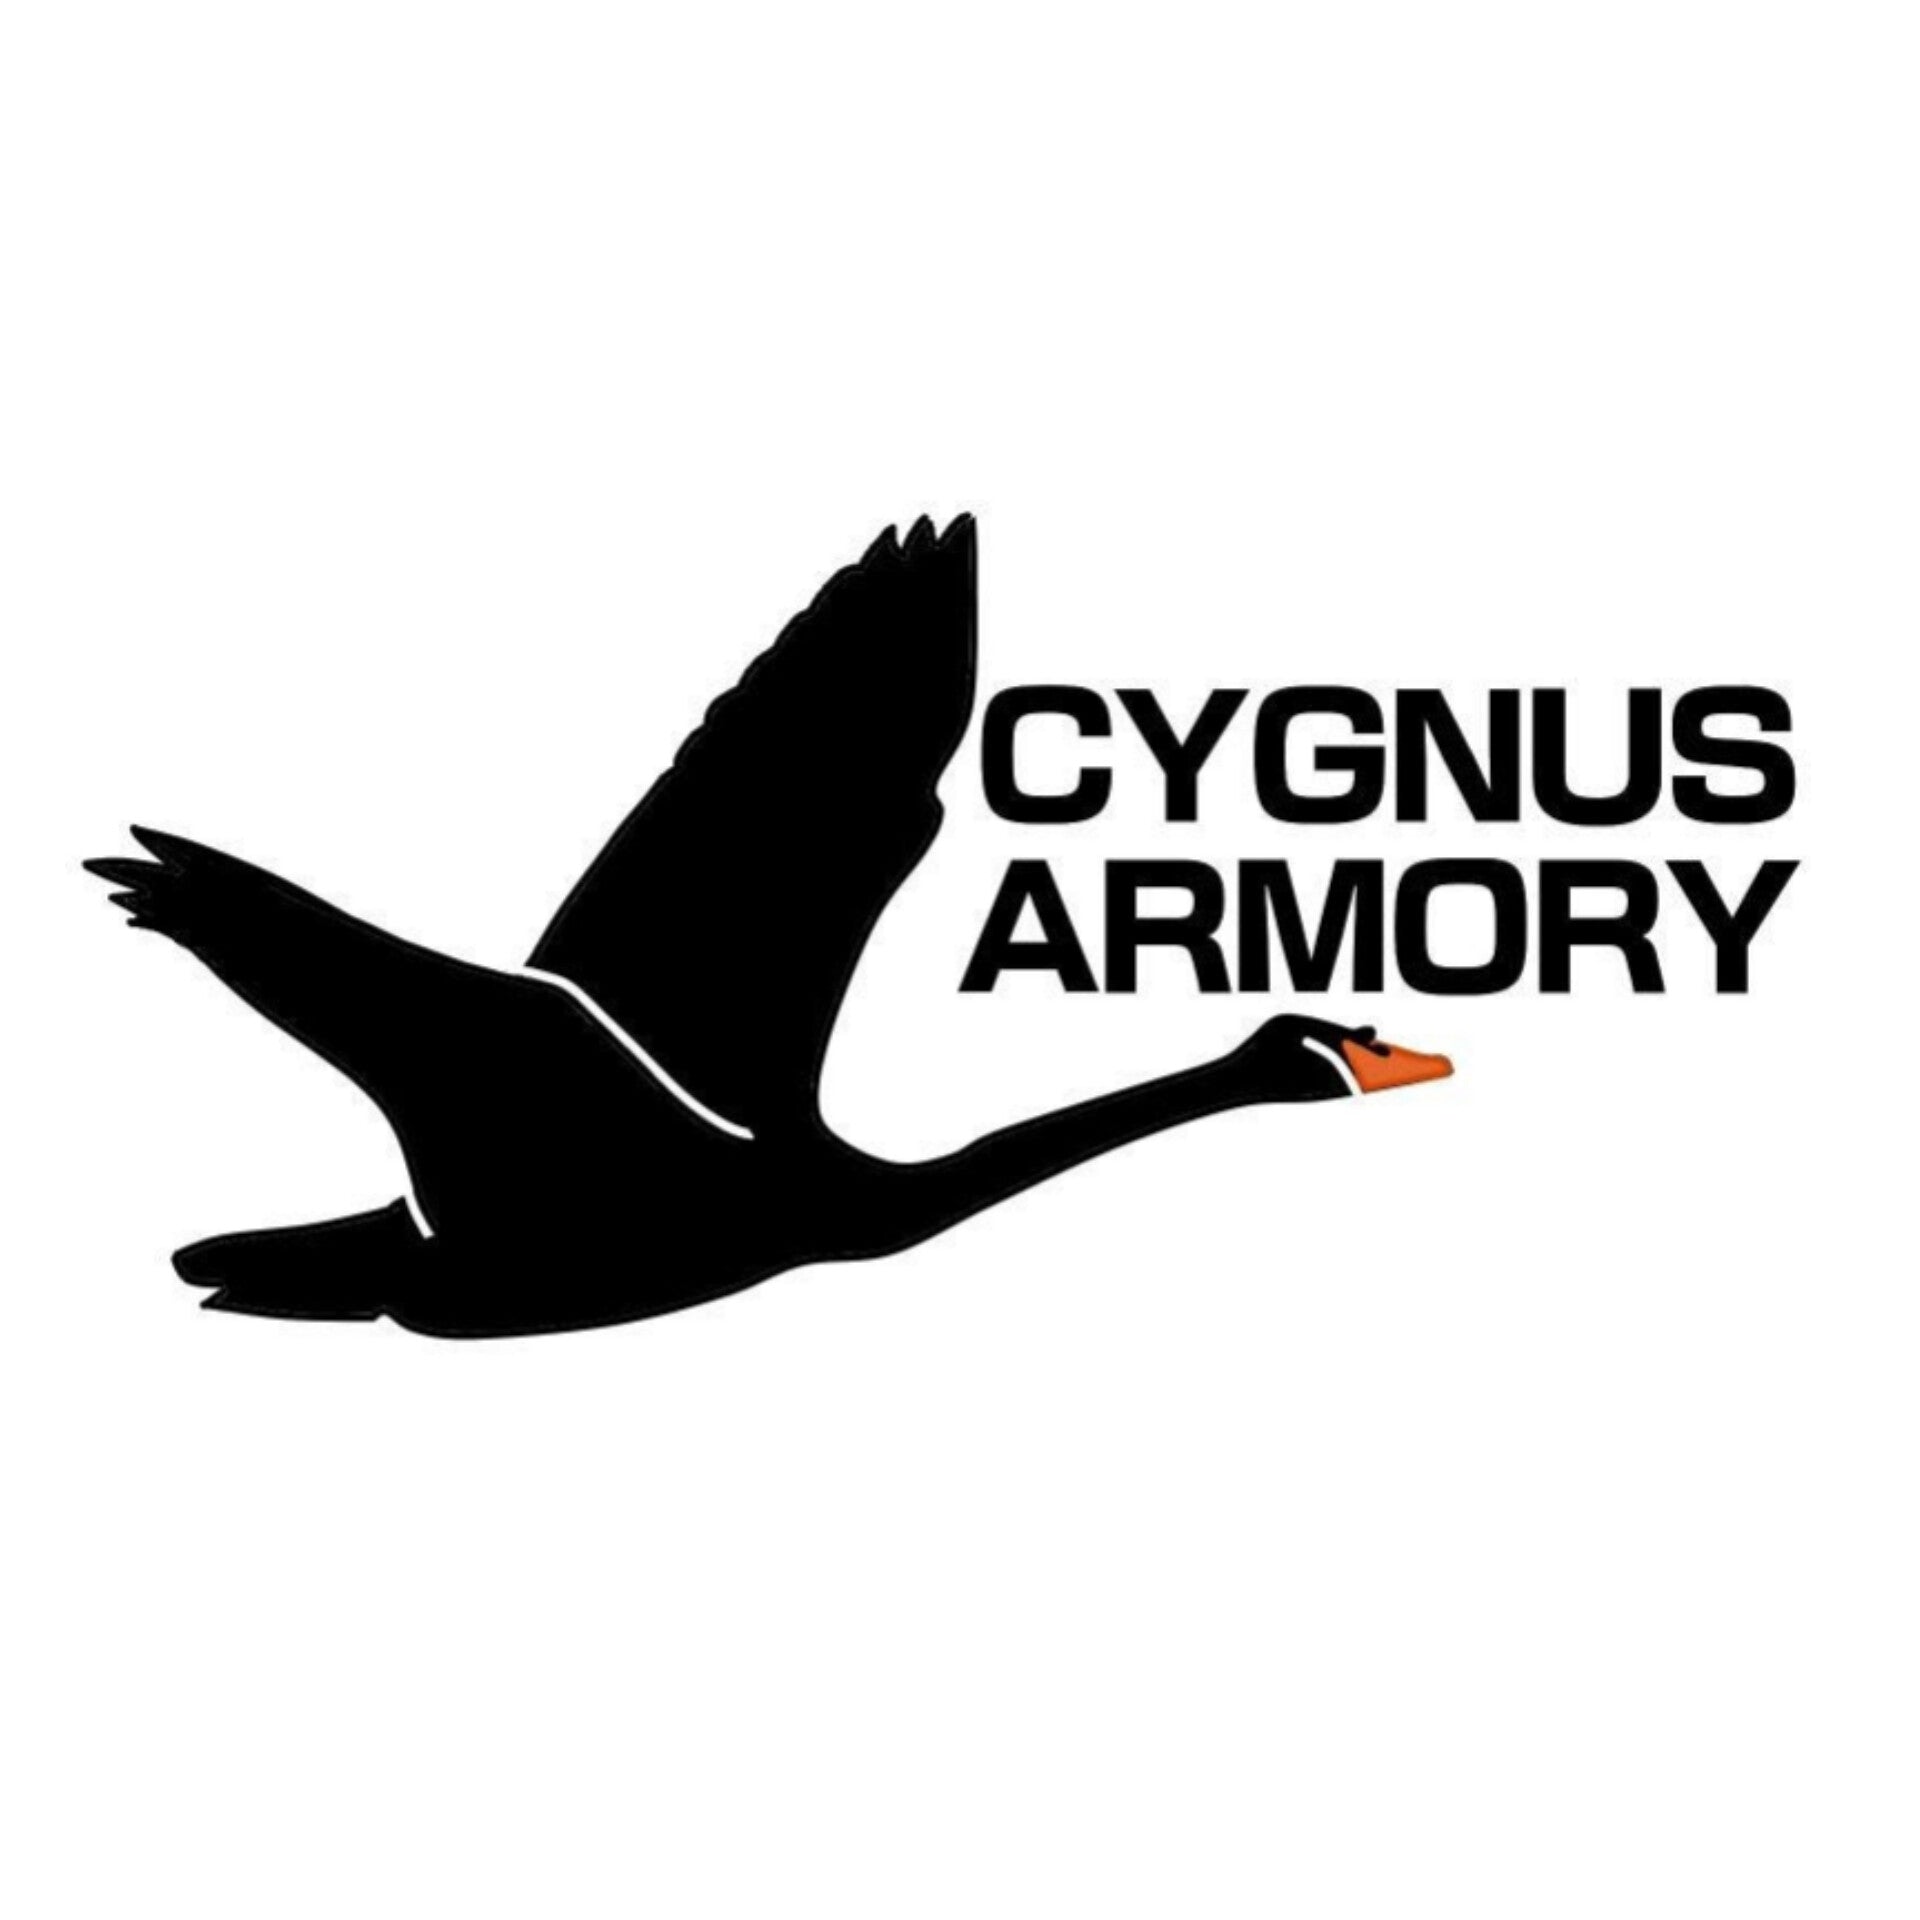 Cygnus Armory - PVC velcro patch